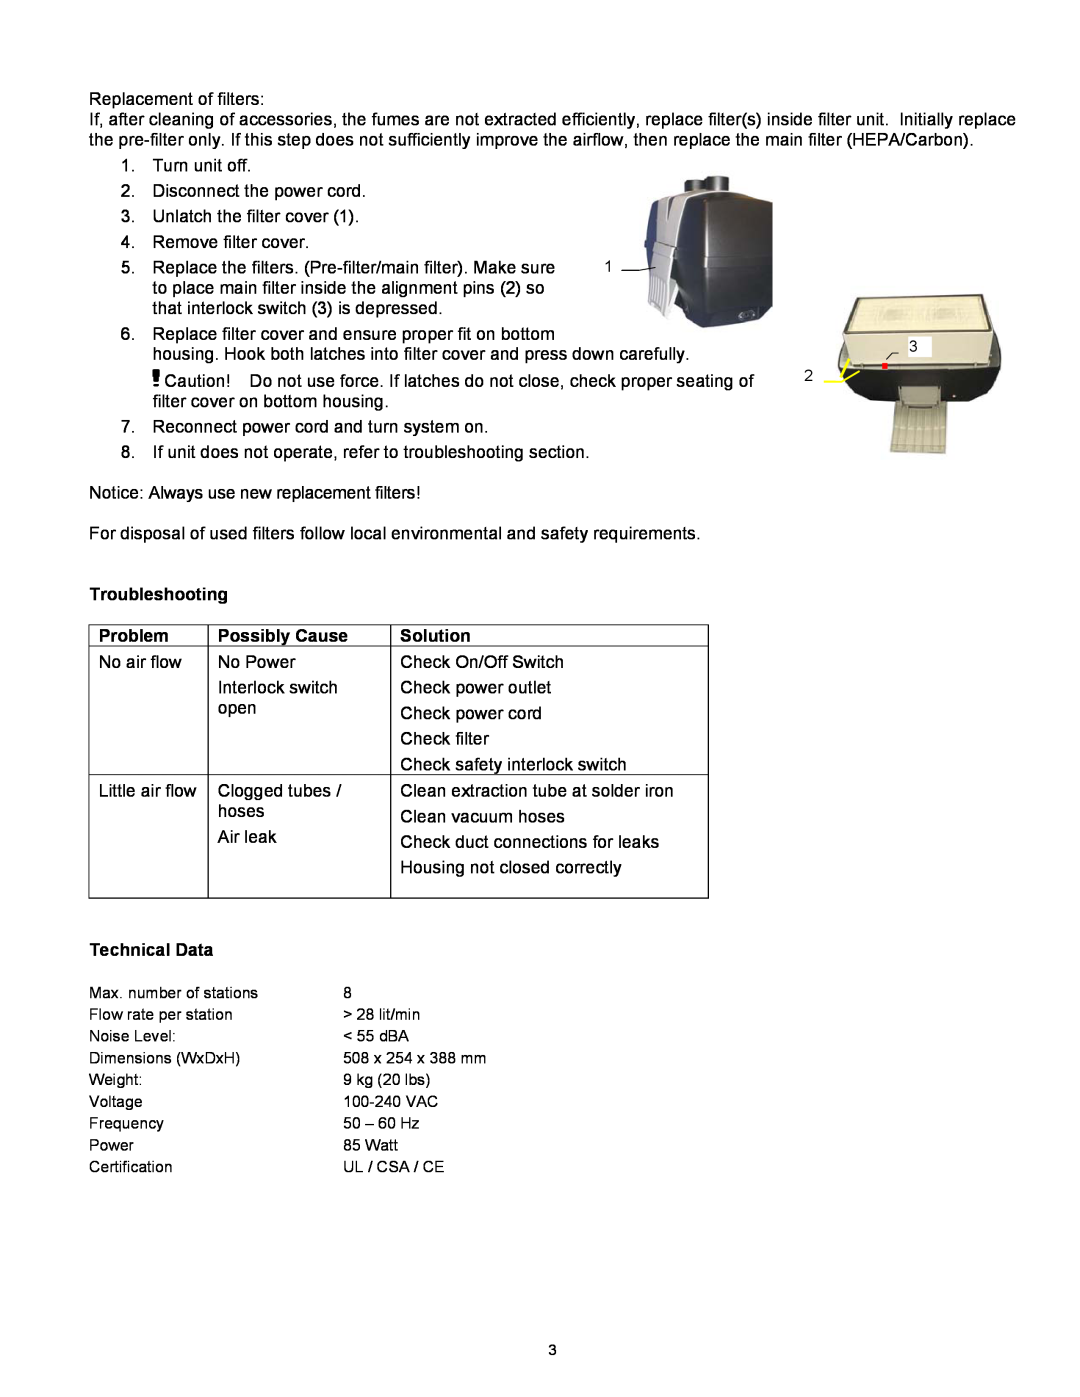 Oki BTX-208 warranty Troubleshooting, Problem, Possibly Cause, Solution, Technical Data 